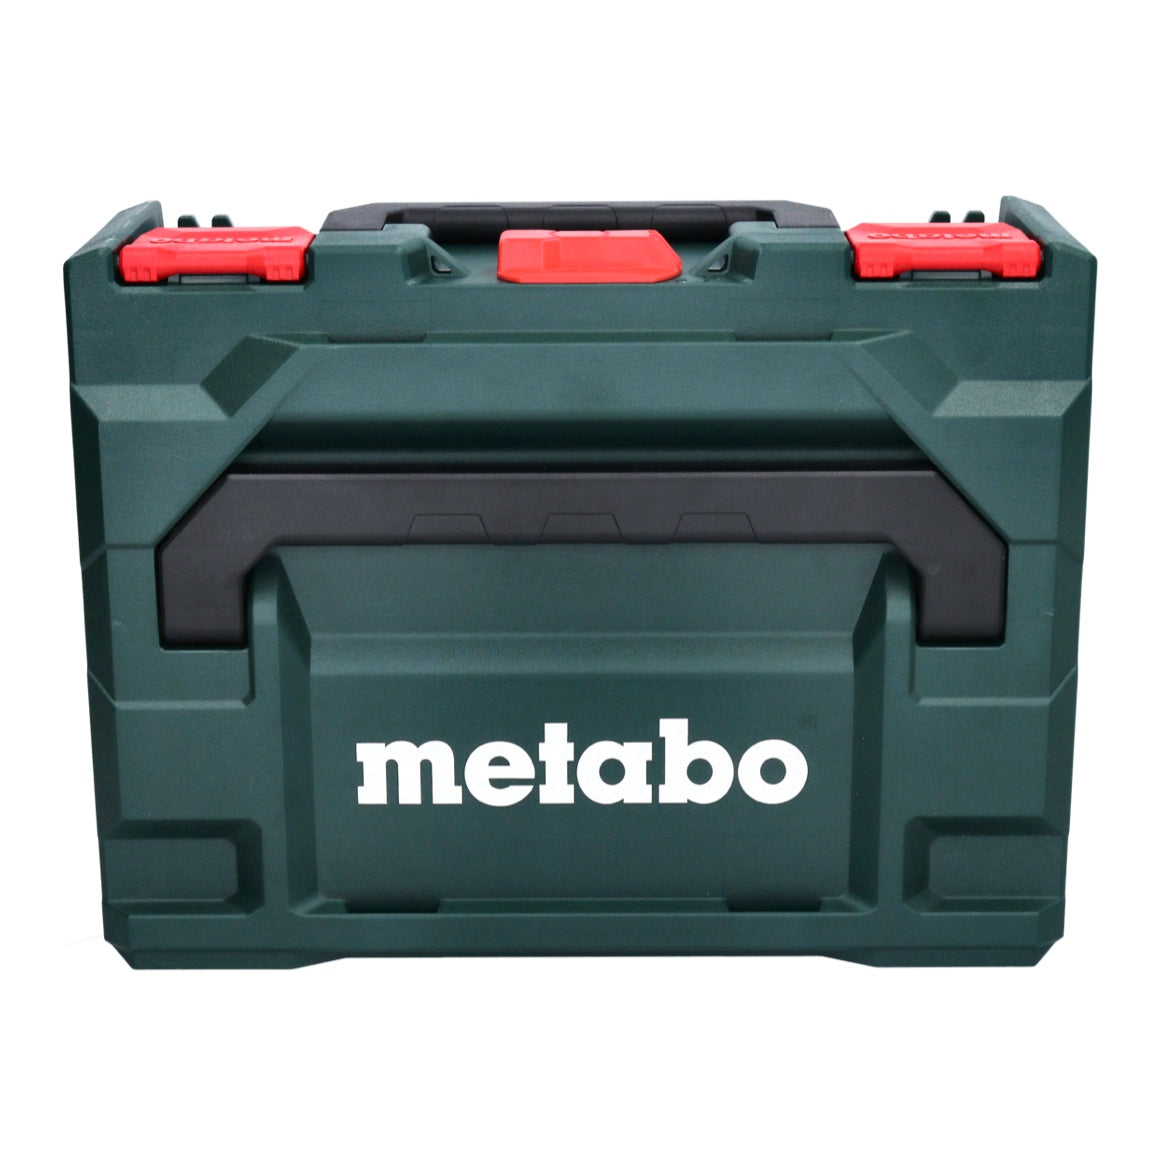 Metabo BS 18 LT BL Akku Bohrschrauber 18 V 75 Nm Brushless + 1x Akku 4,0 Ah + Ladegerät + metaBOX